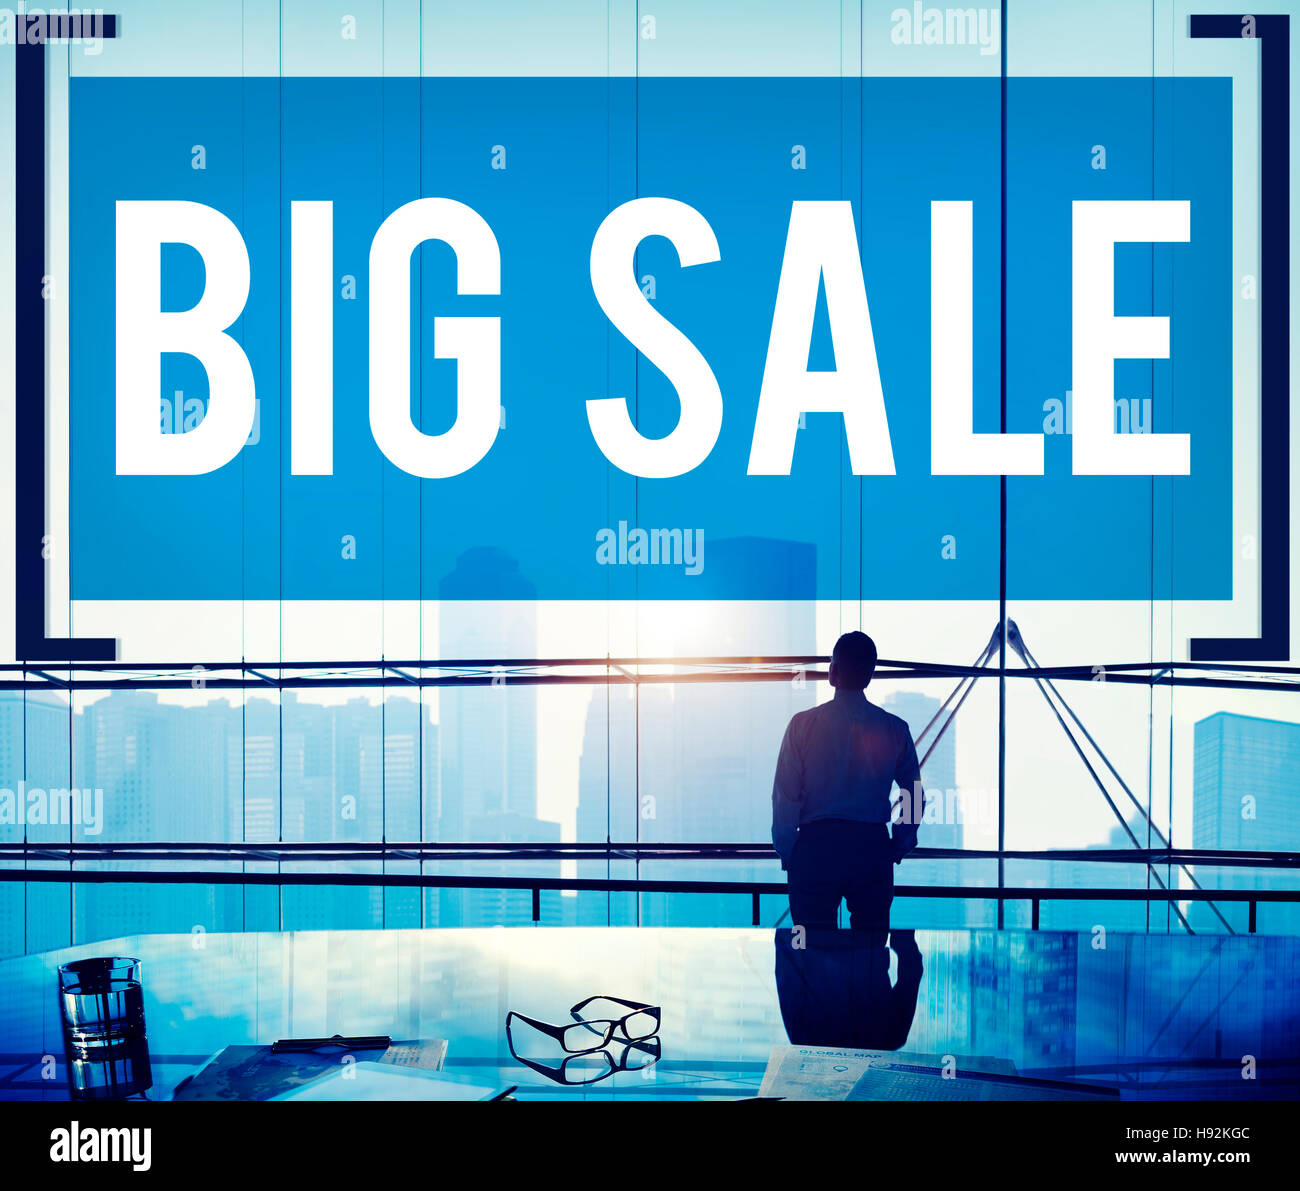 Big Sale Bonus billig kaufen Rabatt Promotion-Konzept Stockfoto